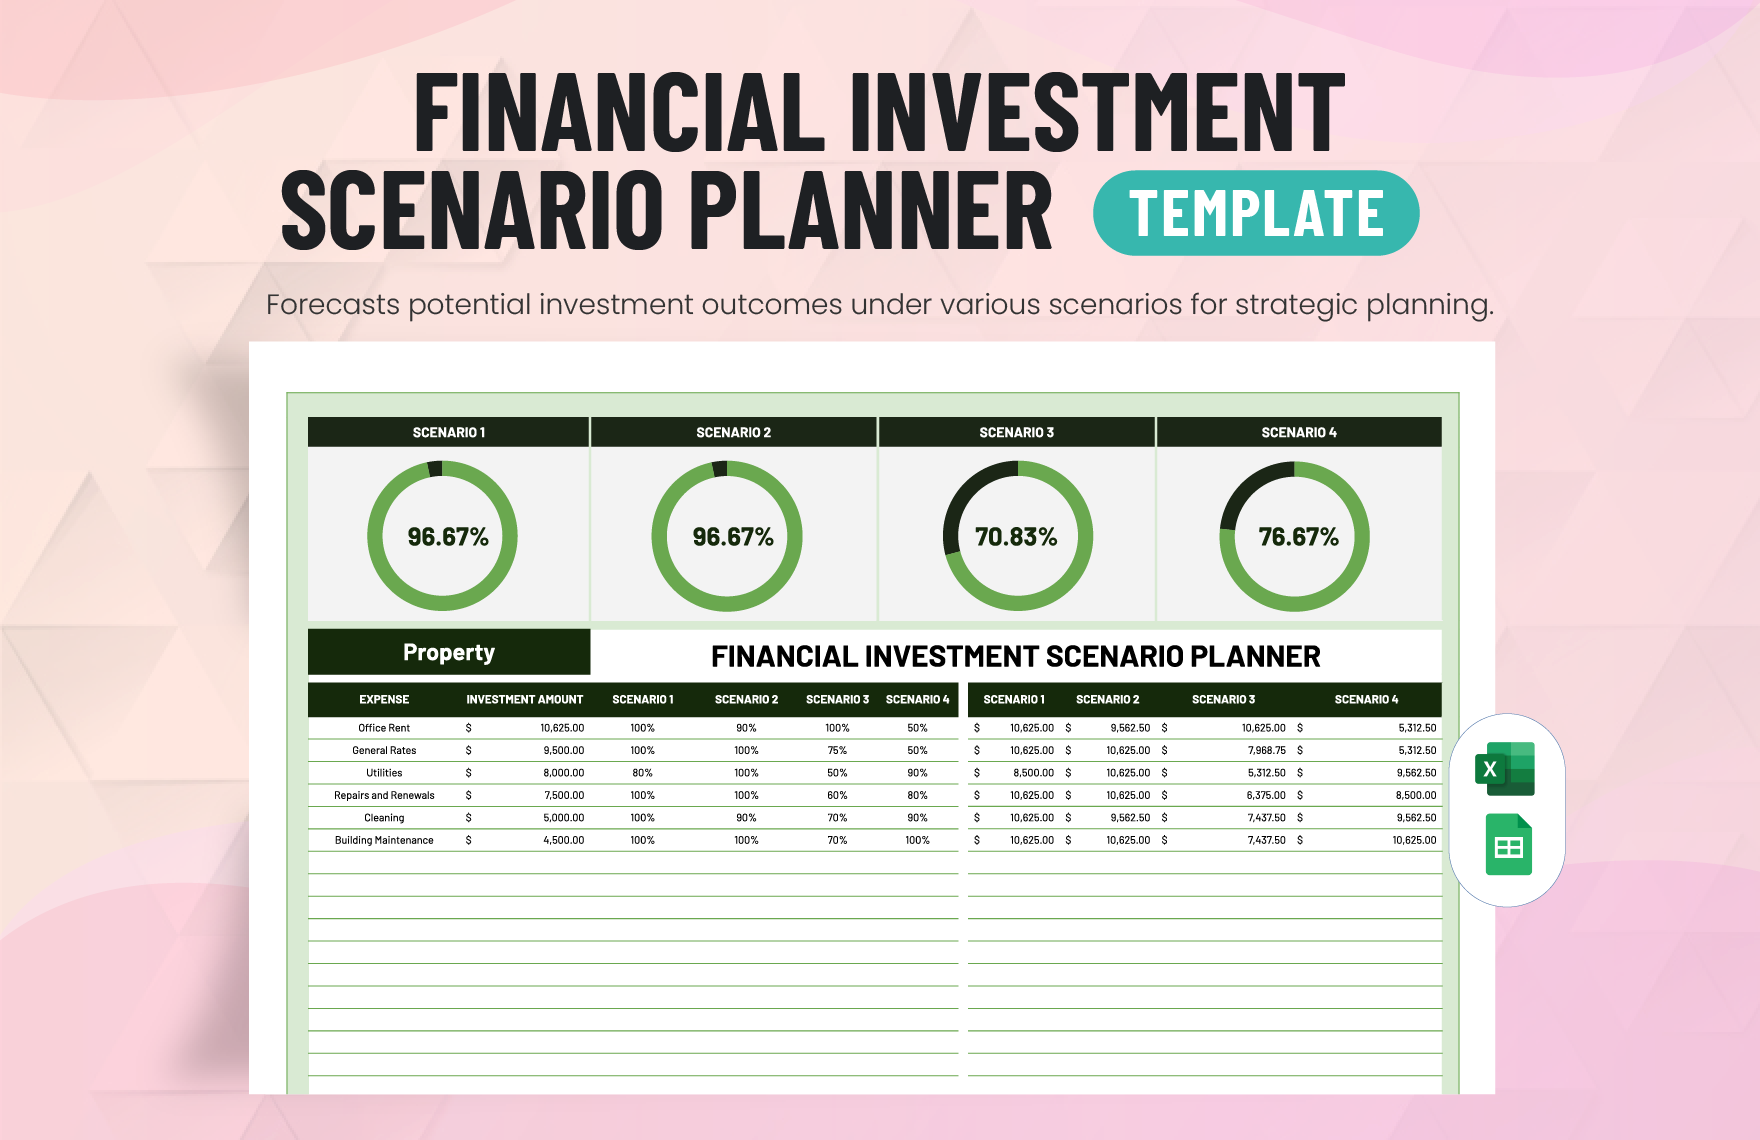 Financial Investment Scenario Planner Template